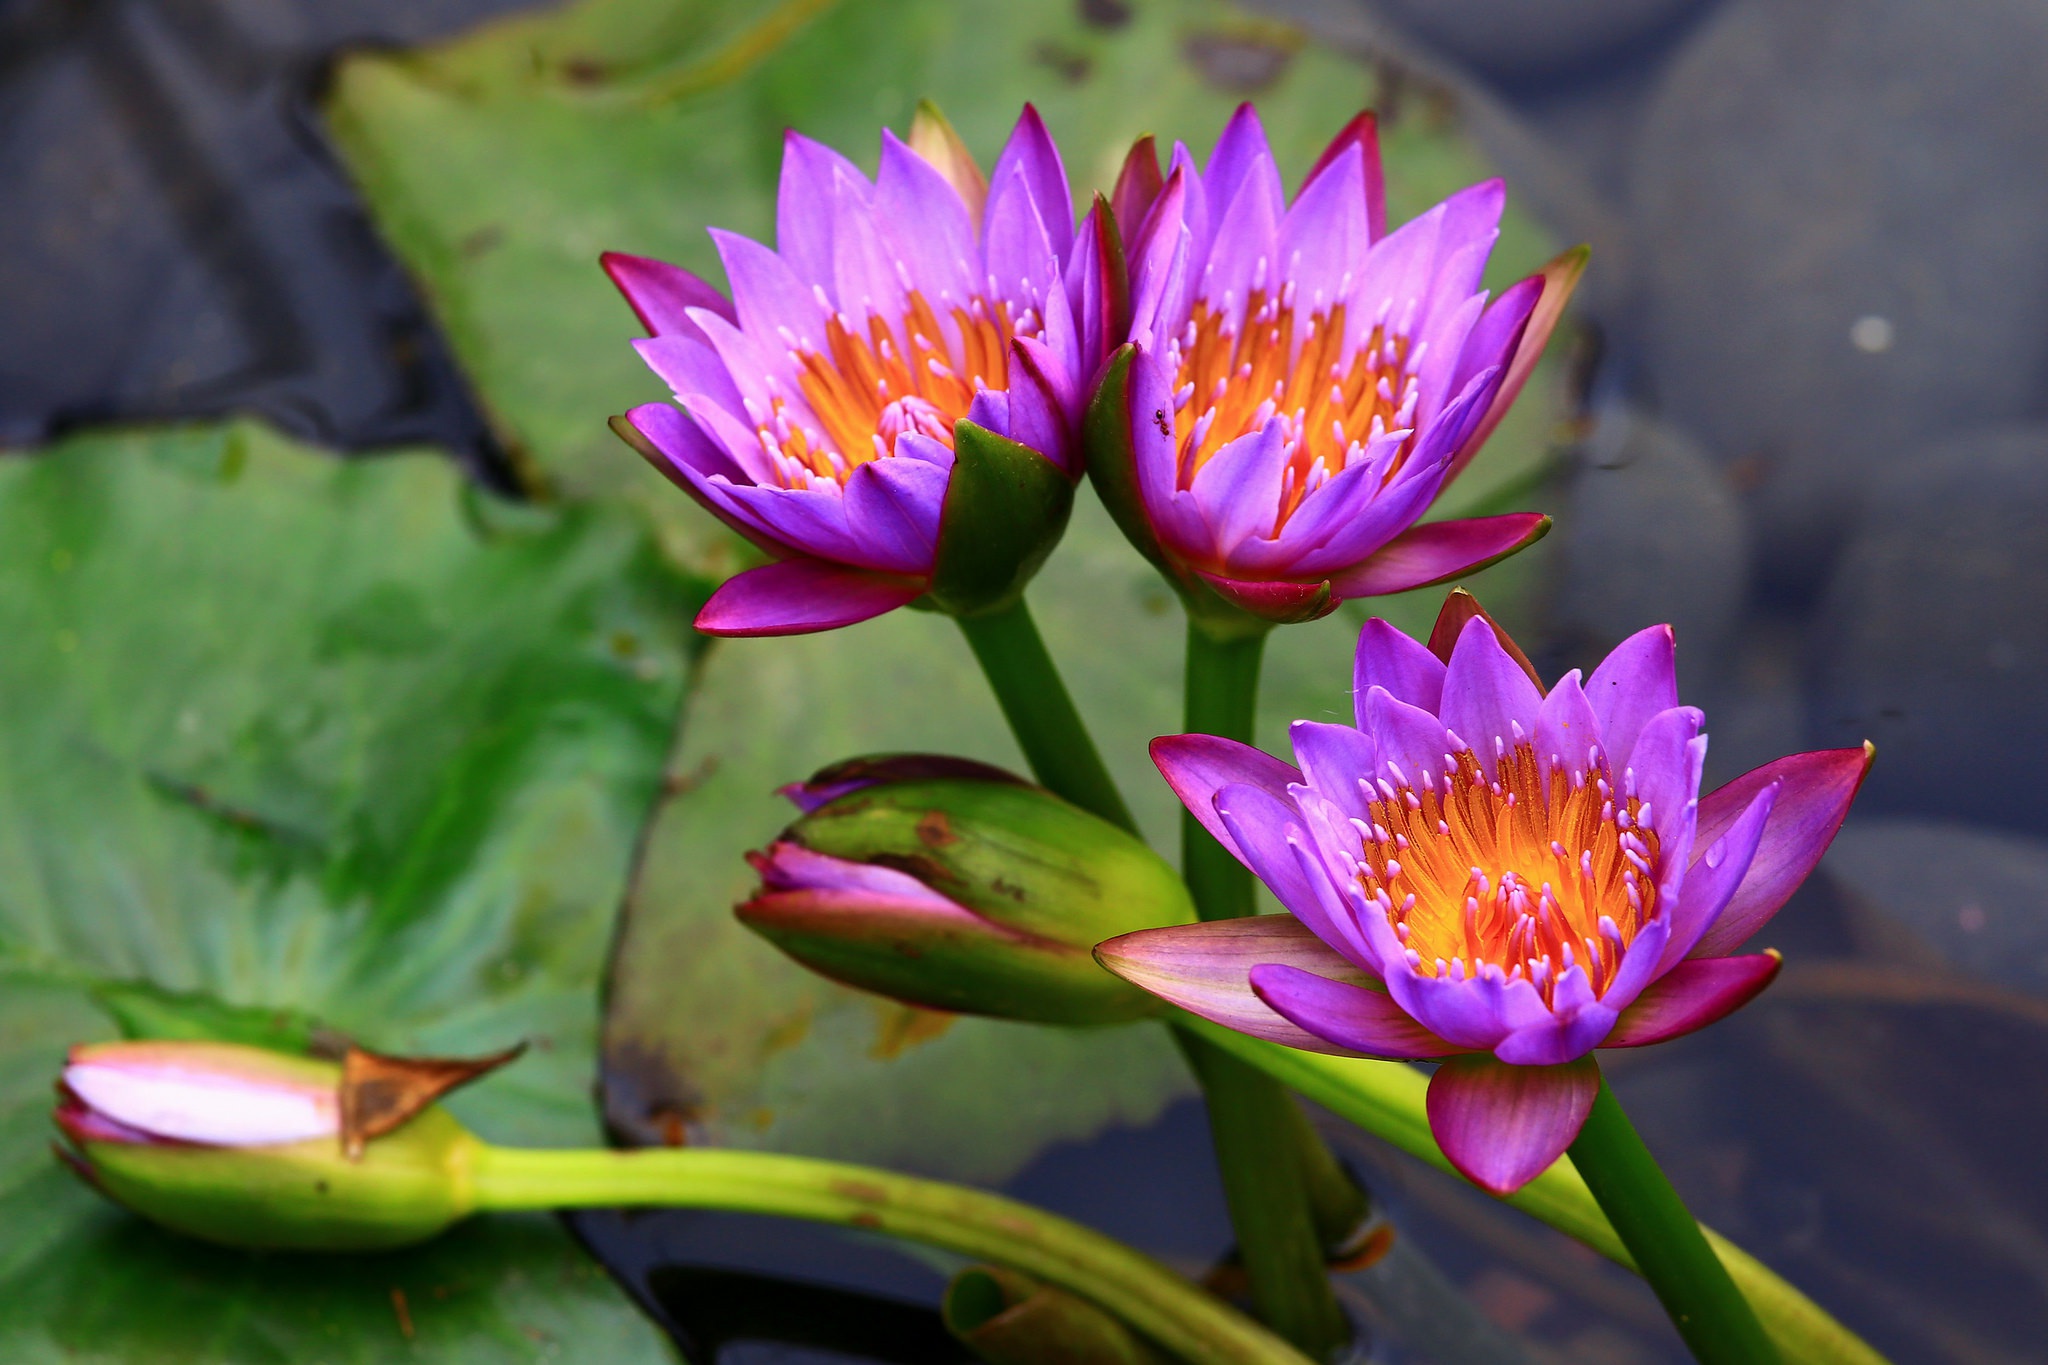 Descarga gratis la imagen Naturaleza, Flores, Flor, Nenúfar, Flor Purpura, Tierra/naturaleza en el escritorio de tu PC